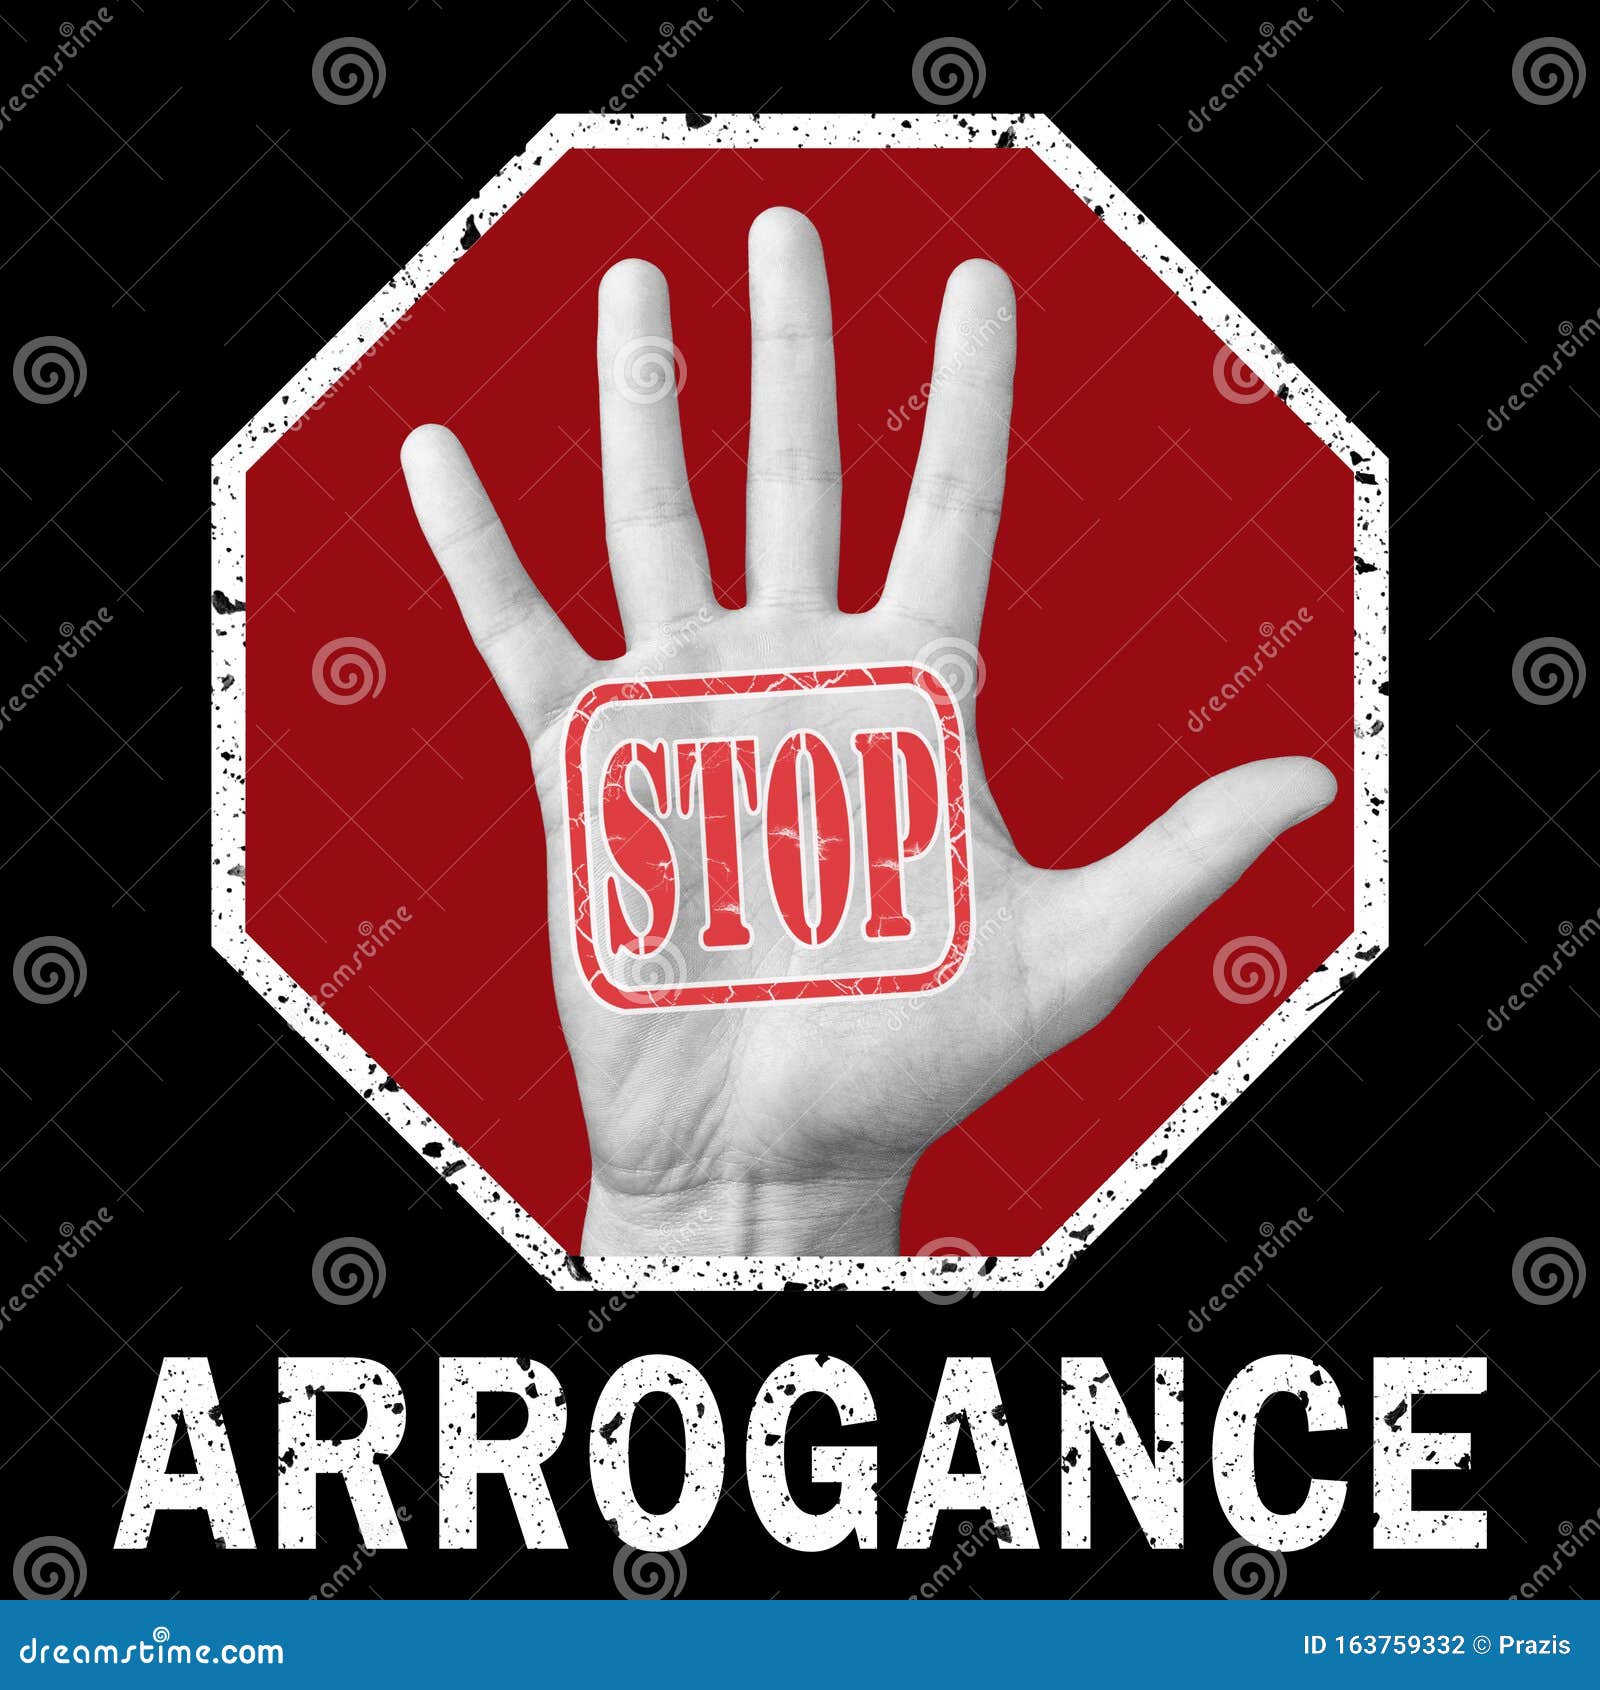 arrogance symbol